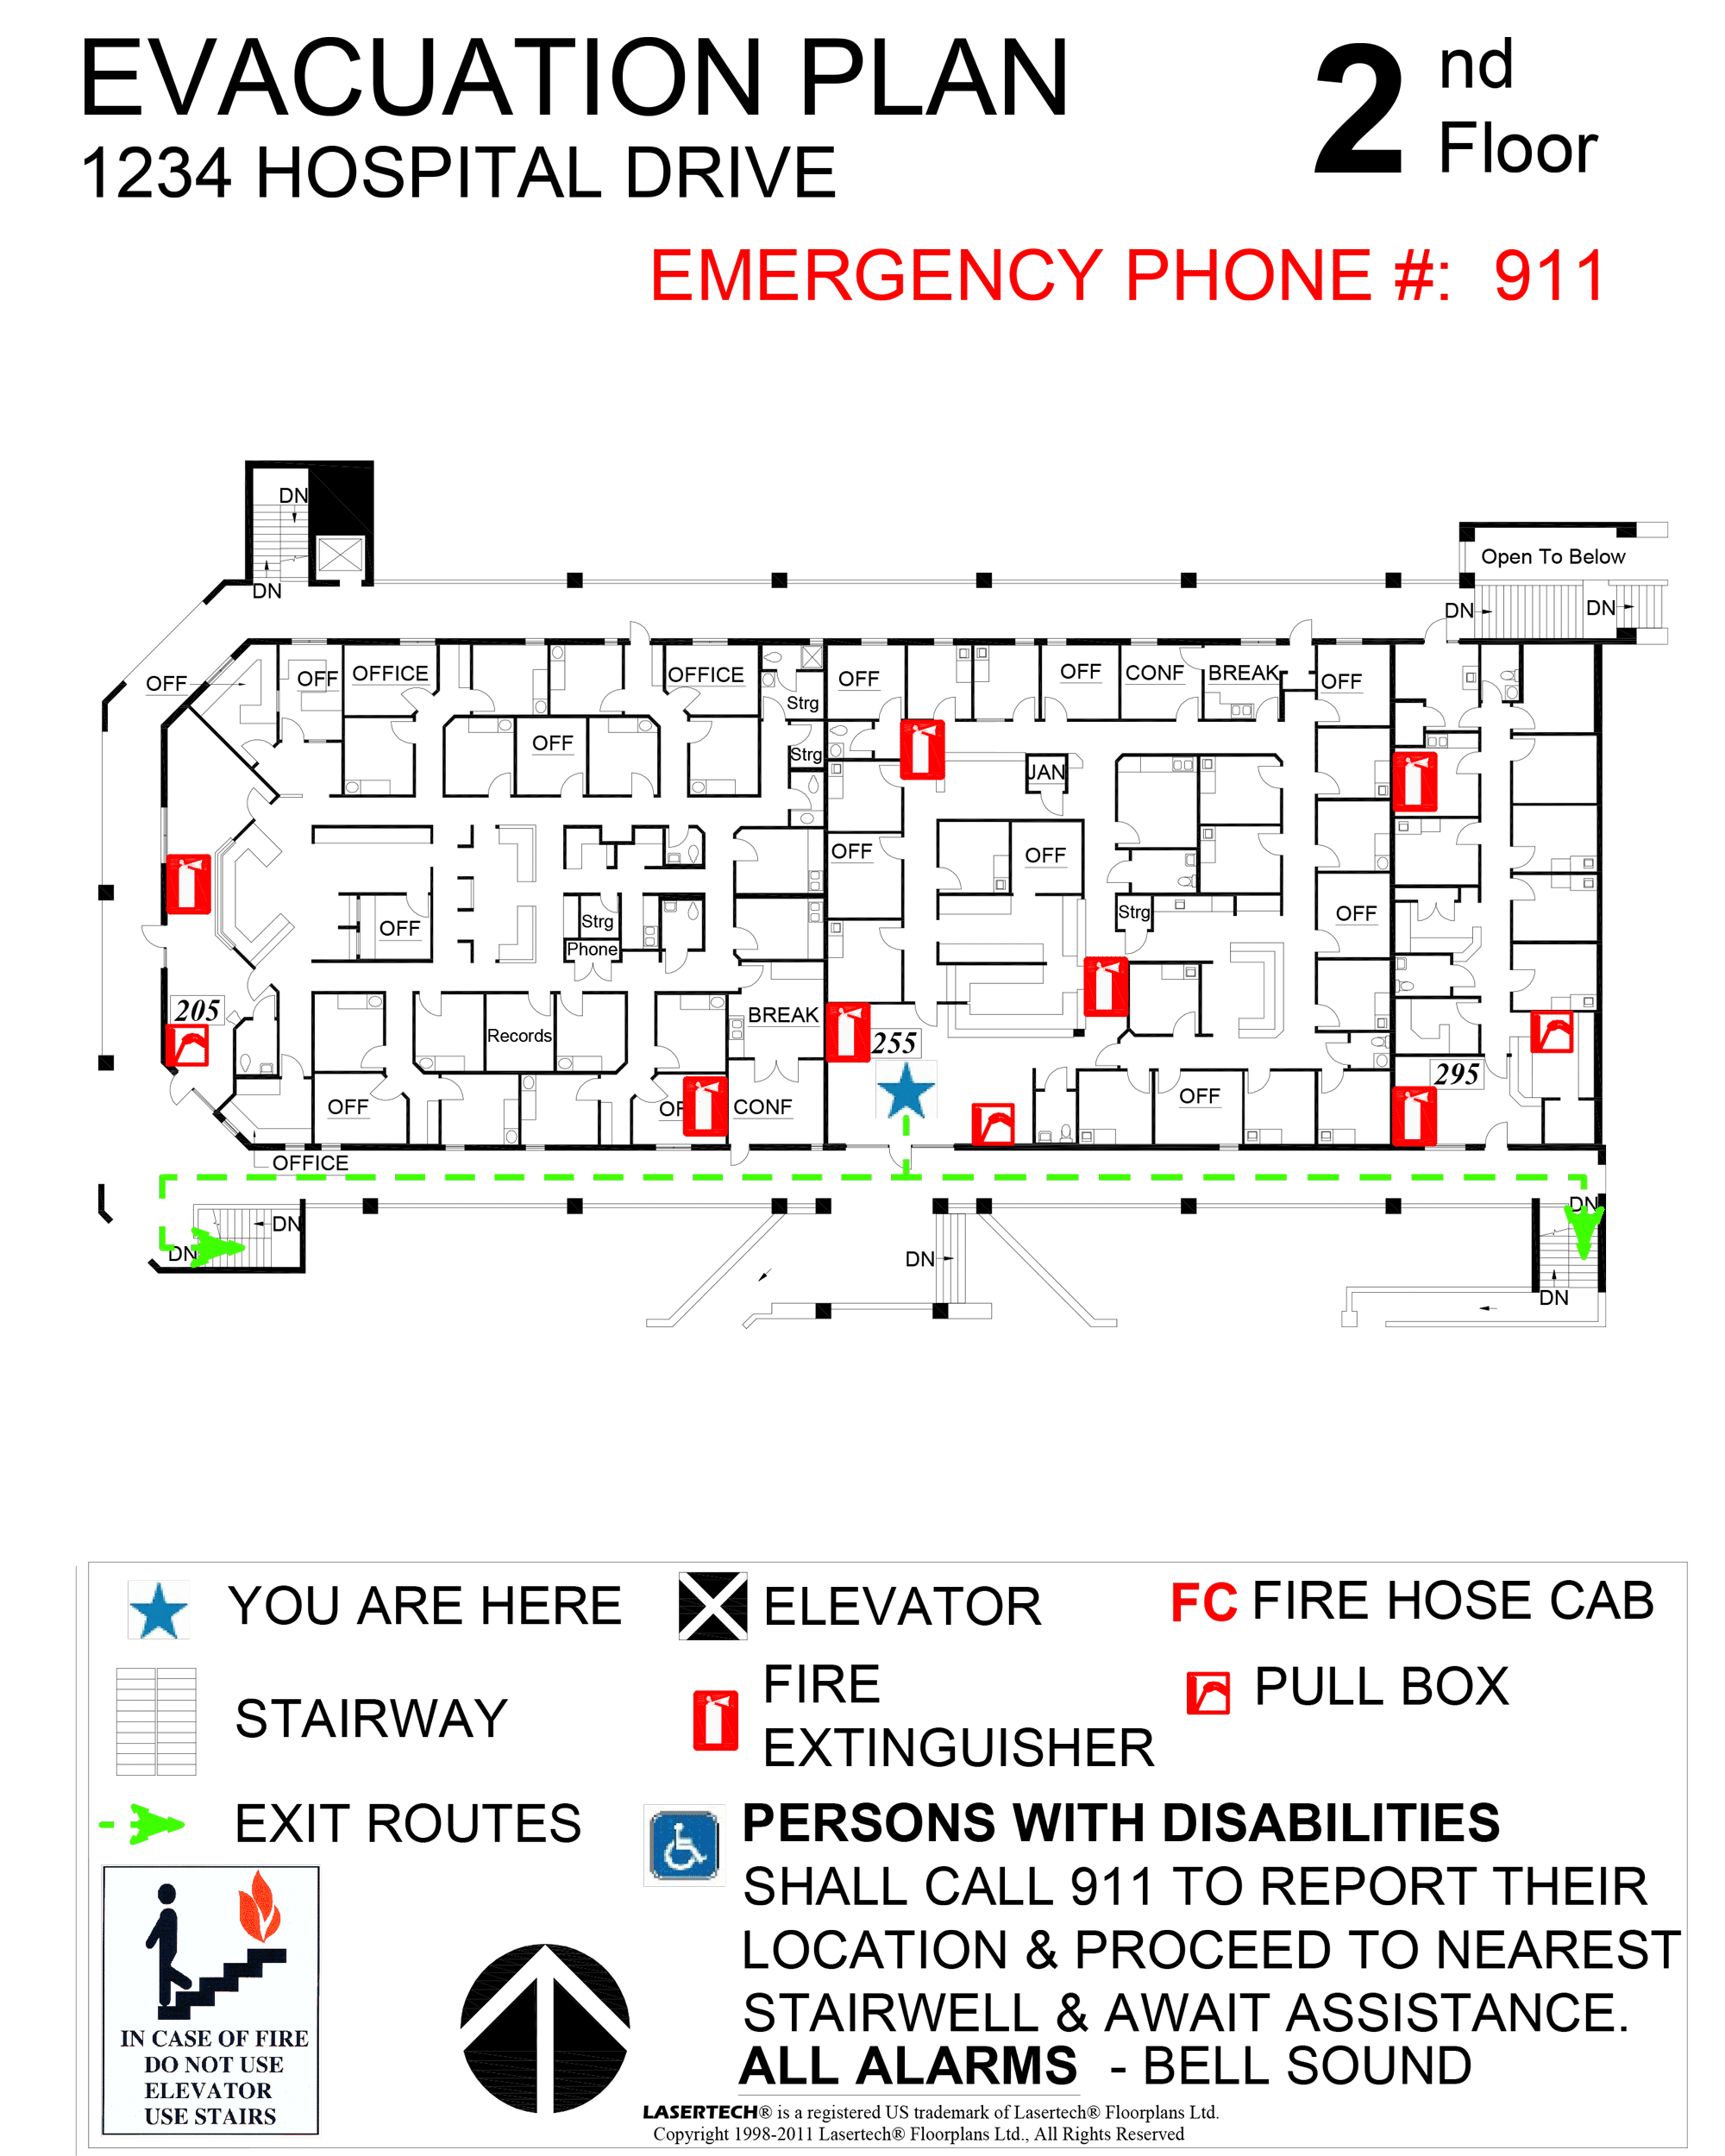 Emergency Evacuation Plan